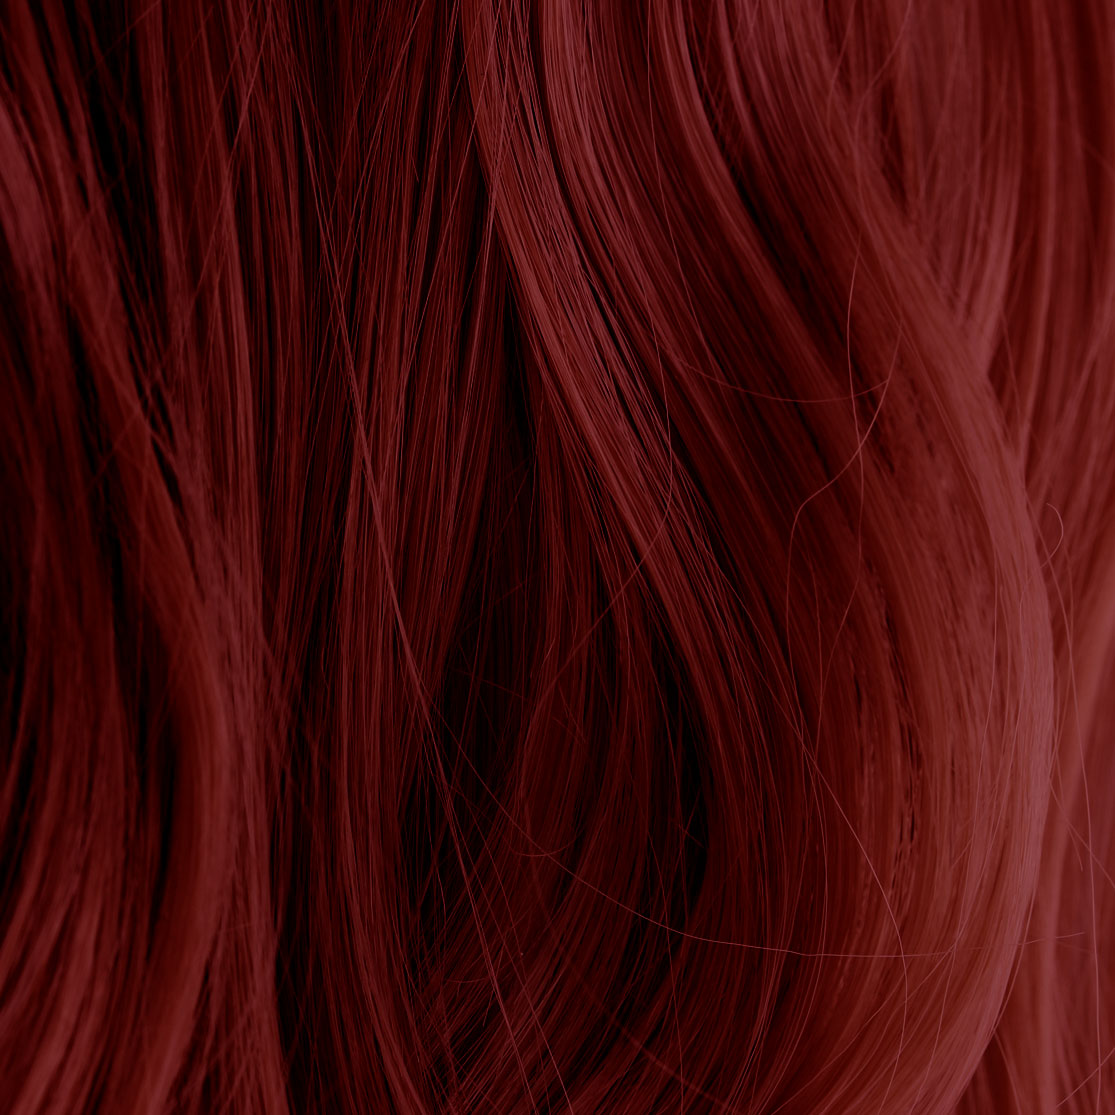 Wine Red Henna Hair Dye | Henna Color Lab® - Henna Hair Dye